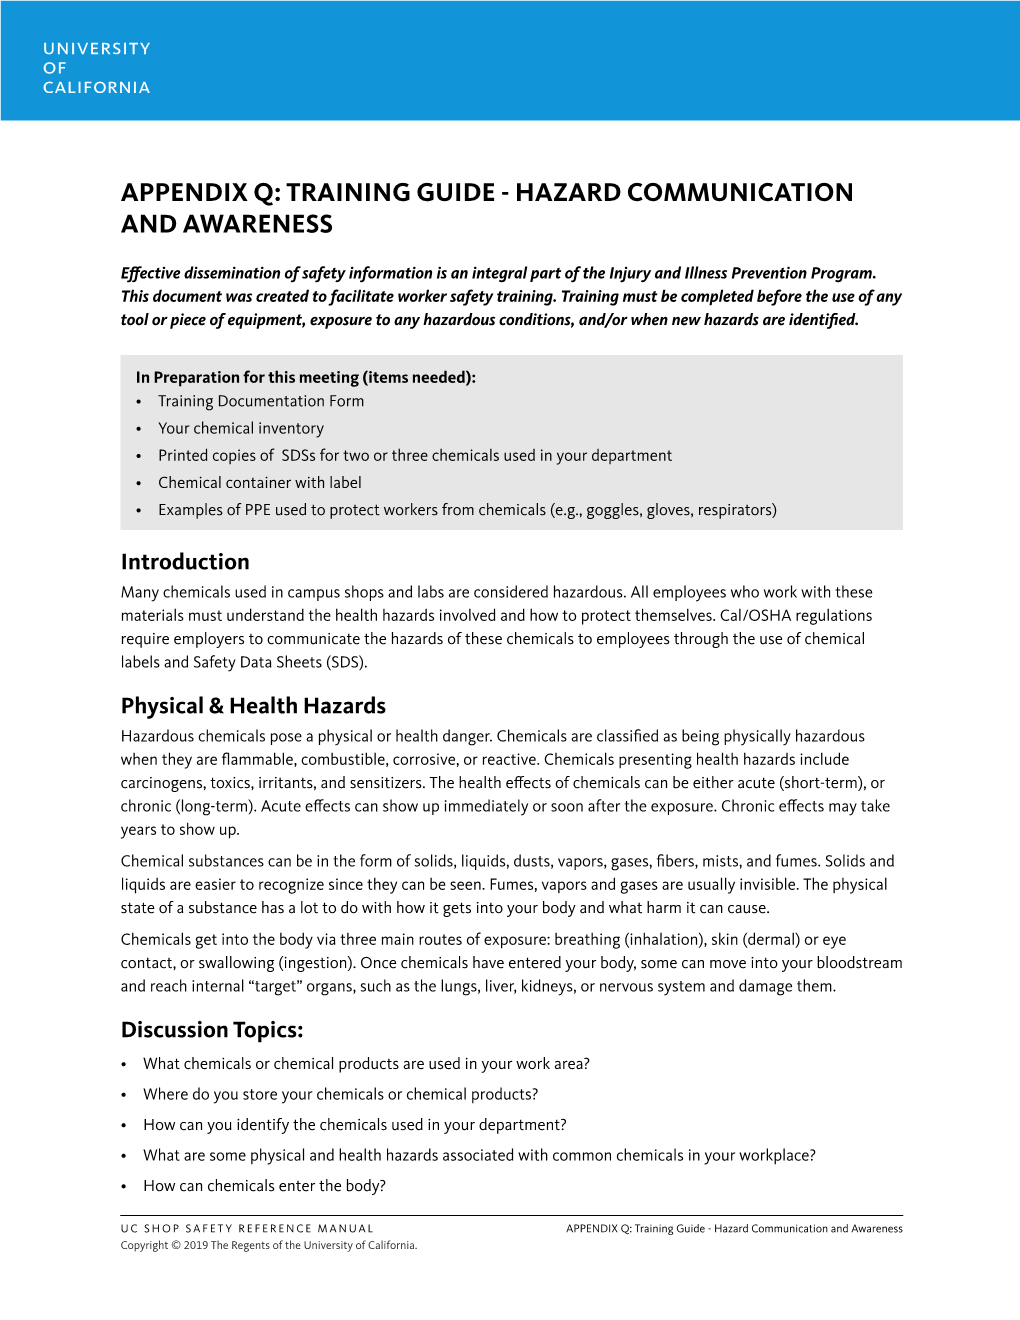 Appendix Q: Training Guide - Hazard Communication and Awareness